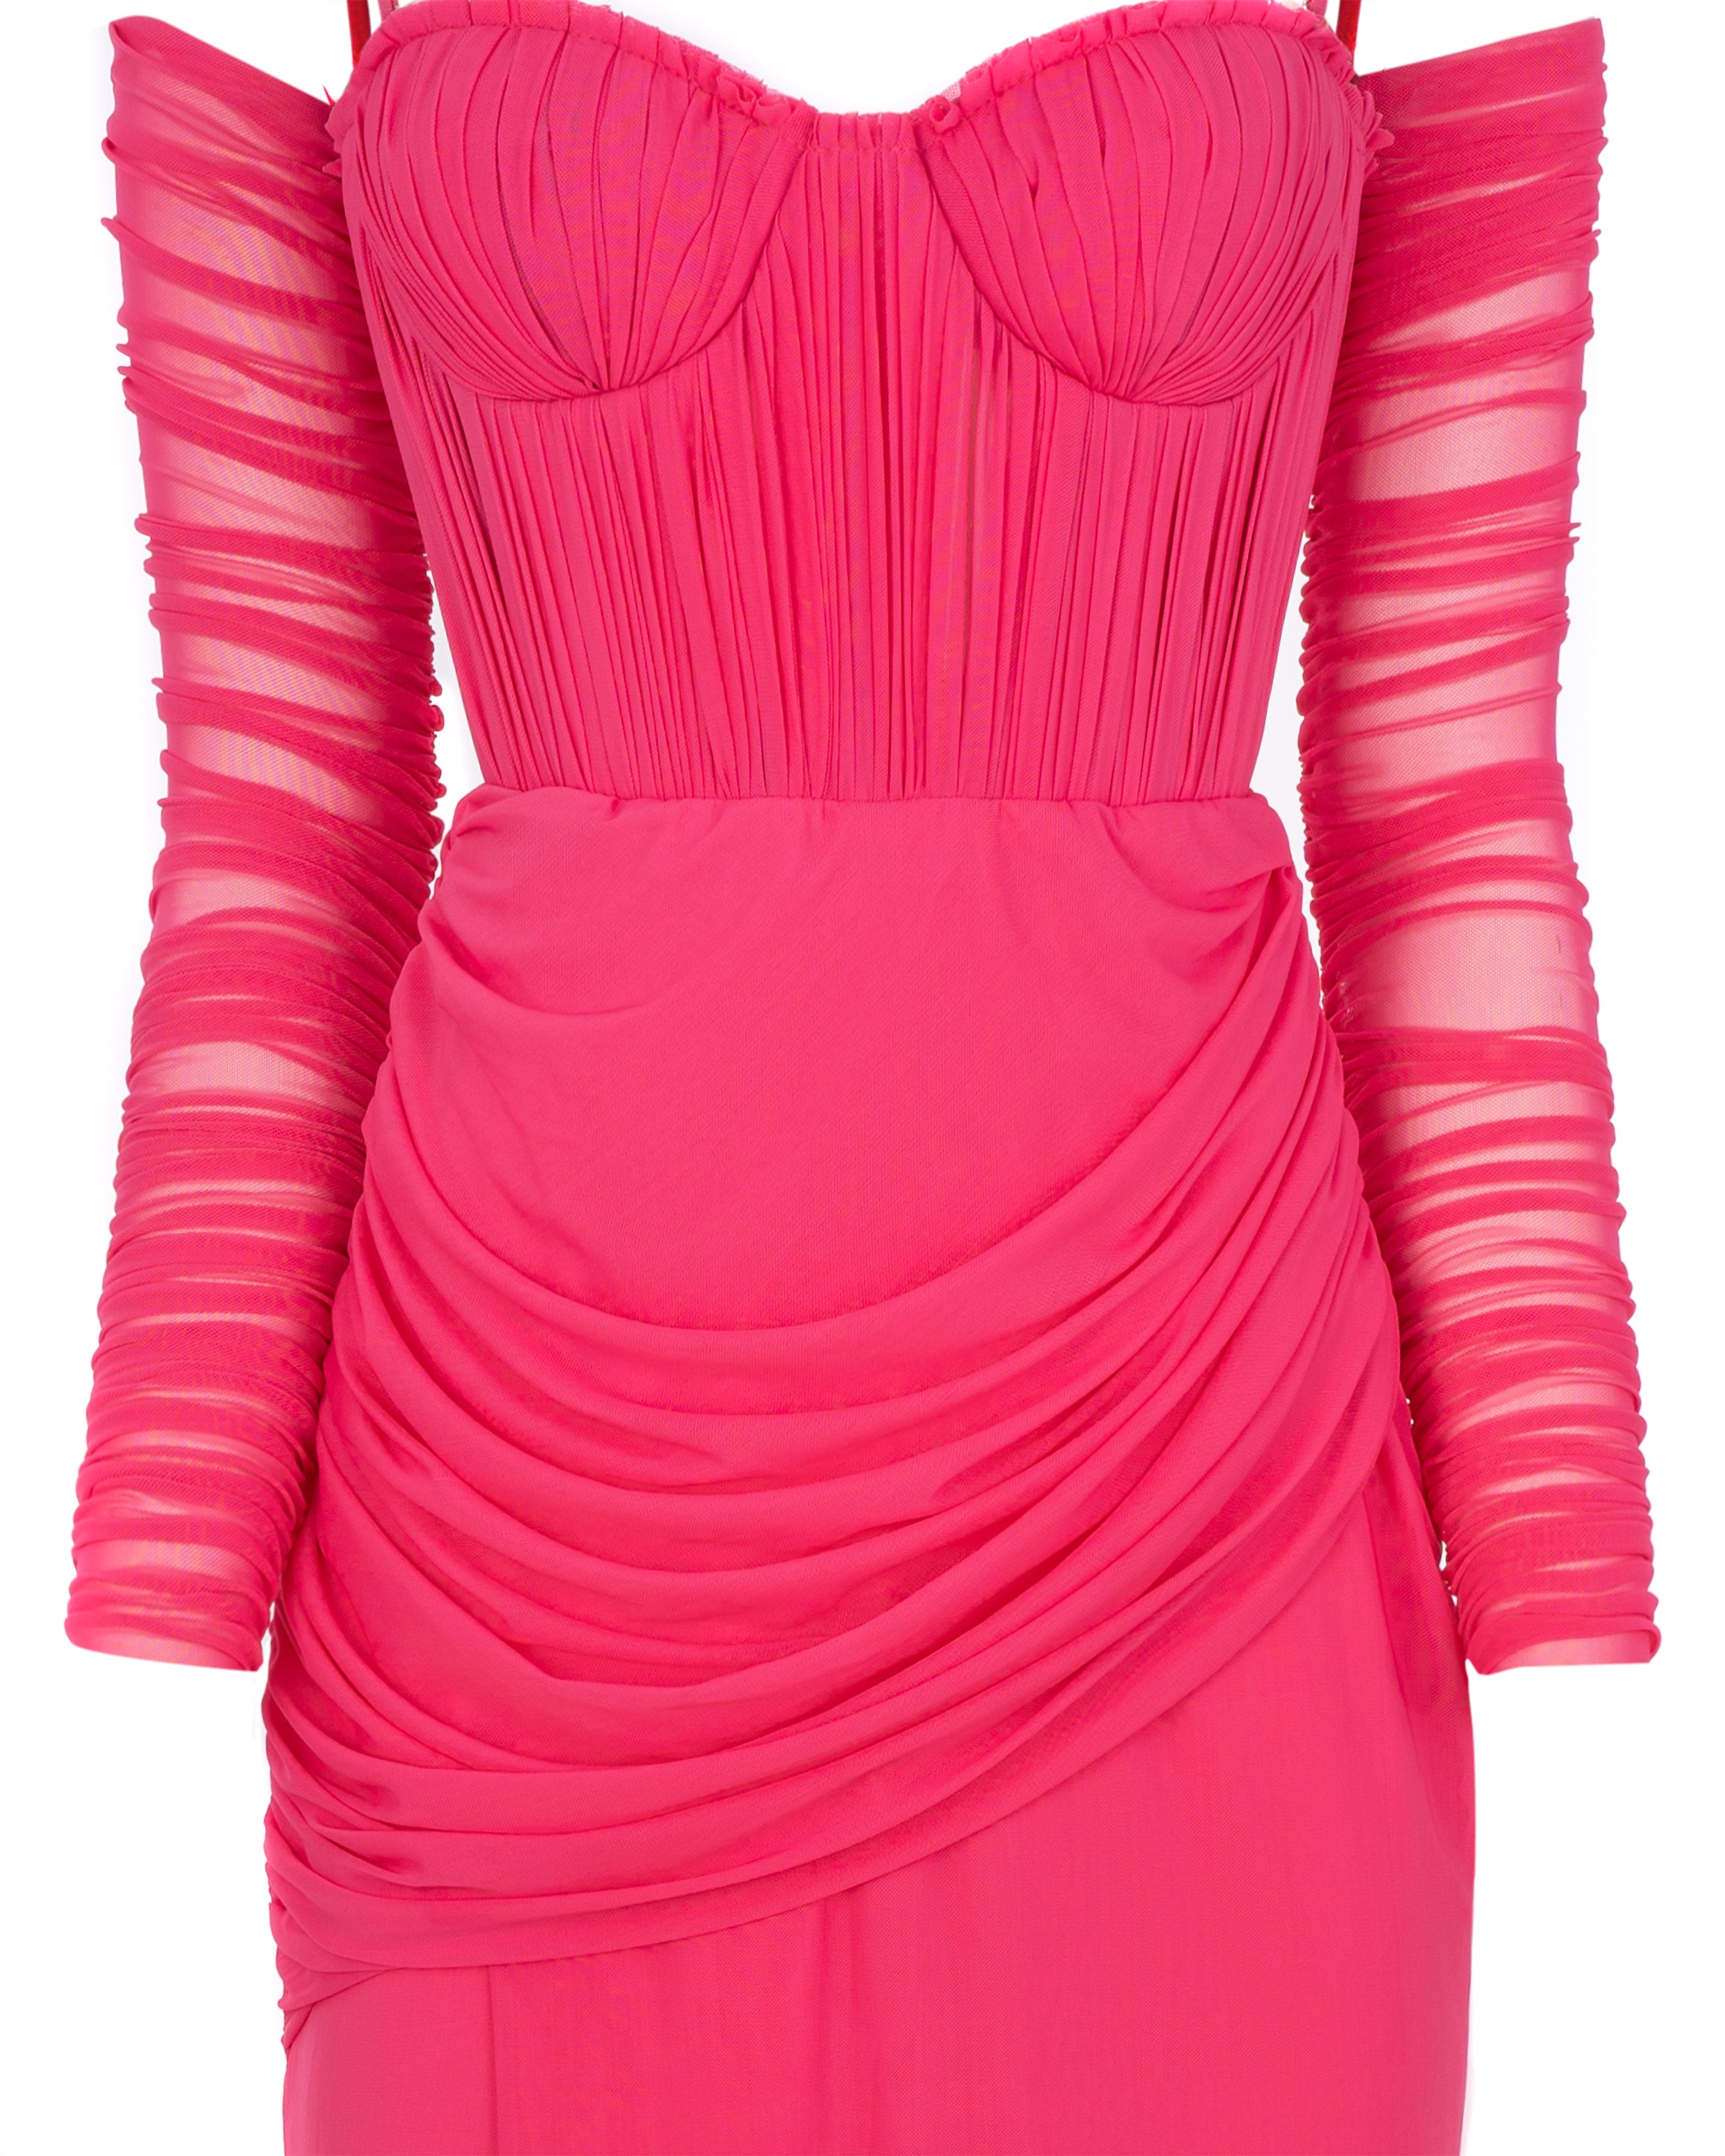 Vibrant pink bustier maxi dress